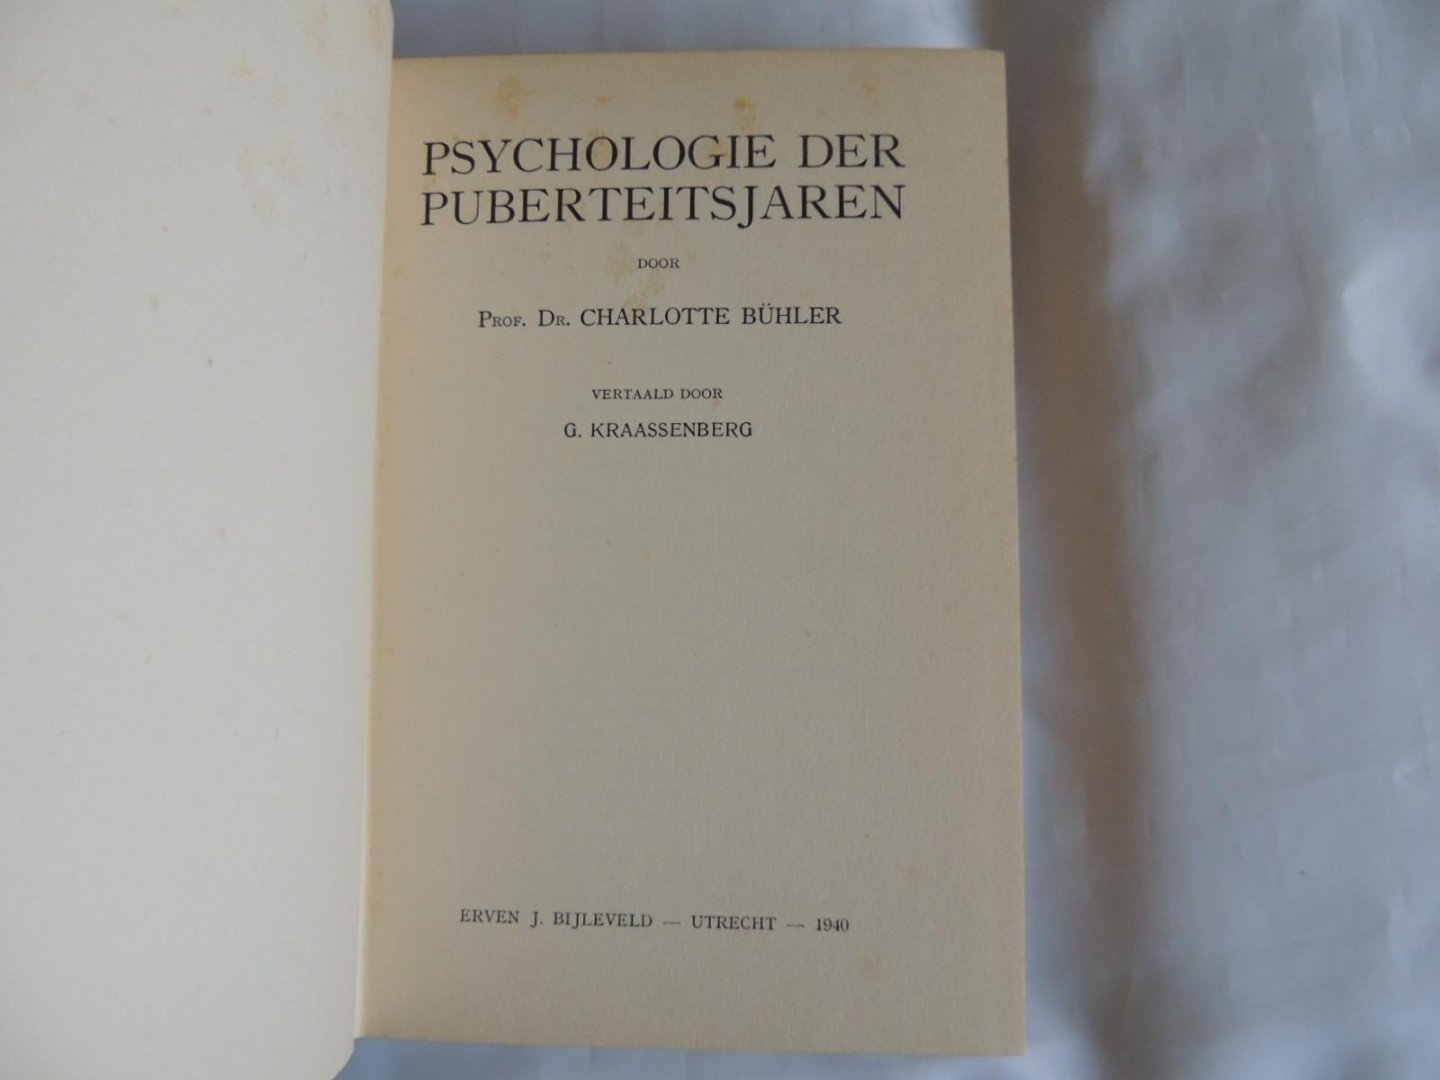 Charlotte Bühler; G Kraassenberg - Psychologie der puberteitsjaren. Vertaald. door G. Kraassenberg.